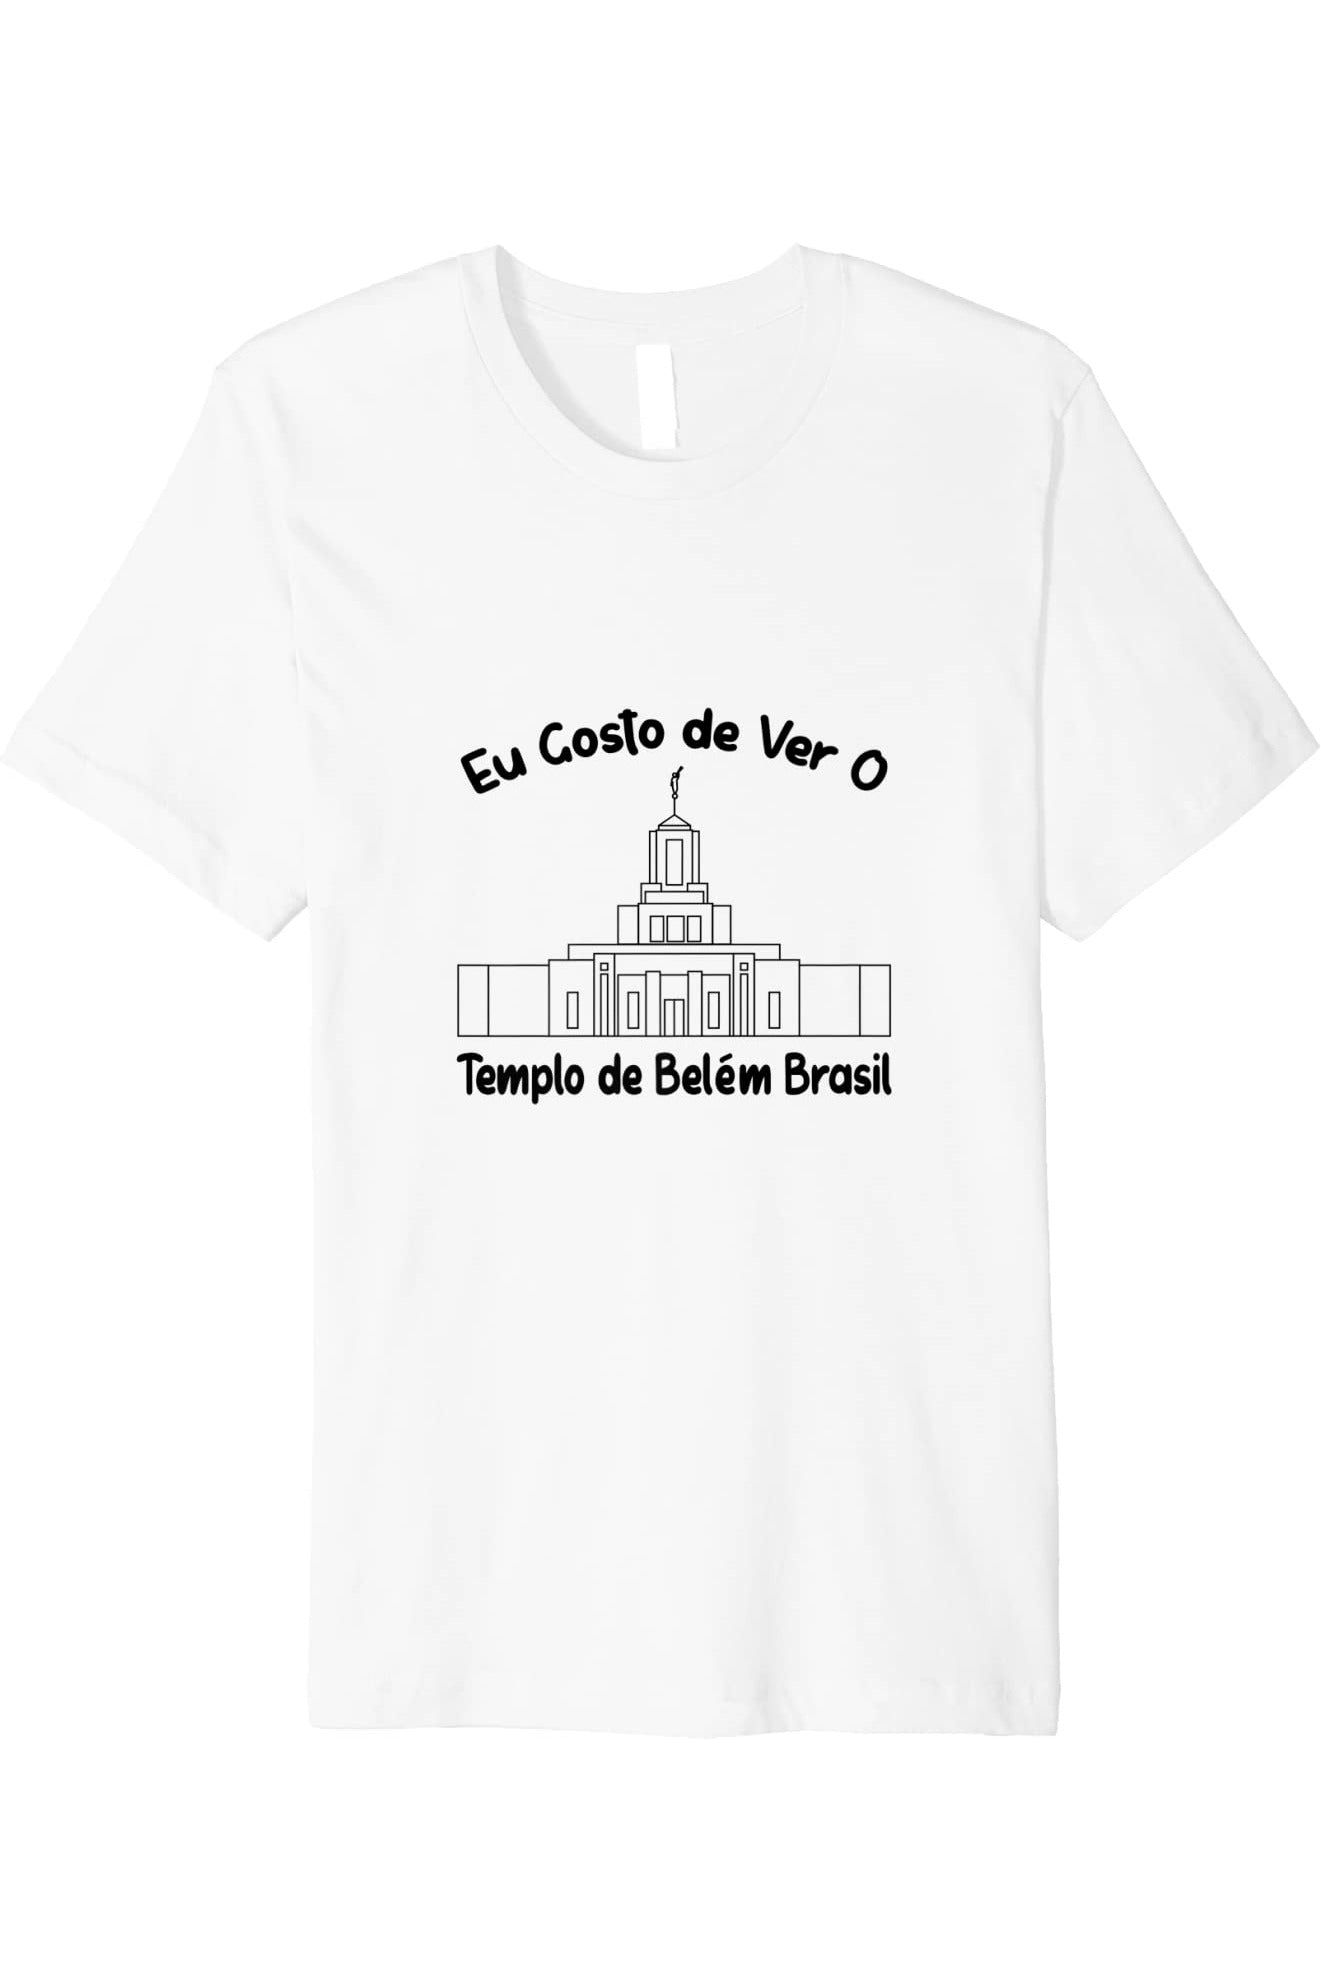 Belem Brazil Temple T-Shirt - Premium - Primary Style (Portuguese) US